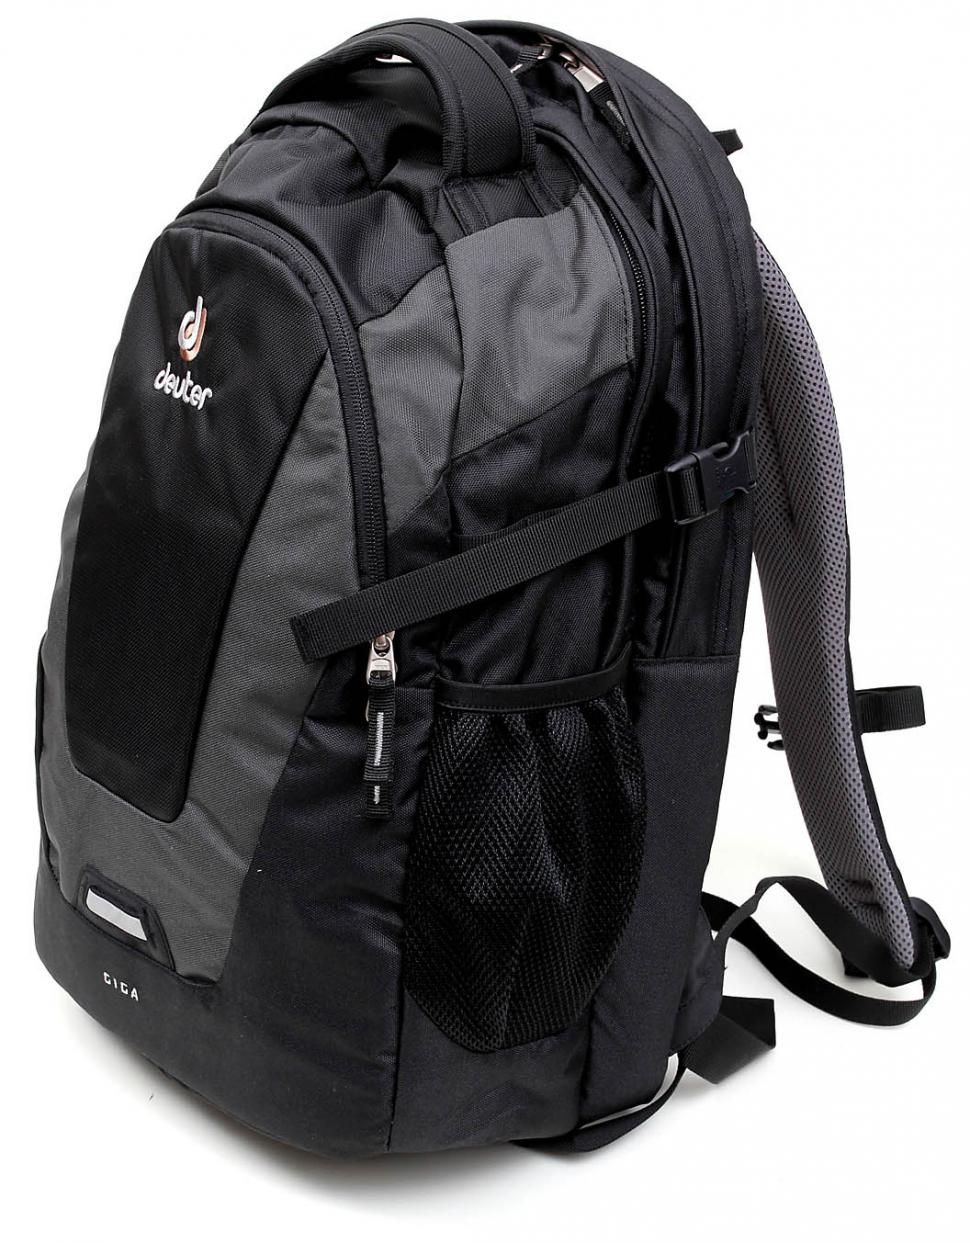 Review: Deuter Giga backpack